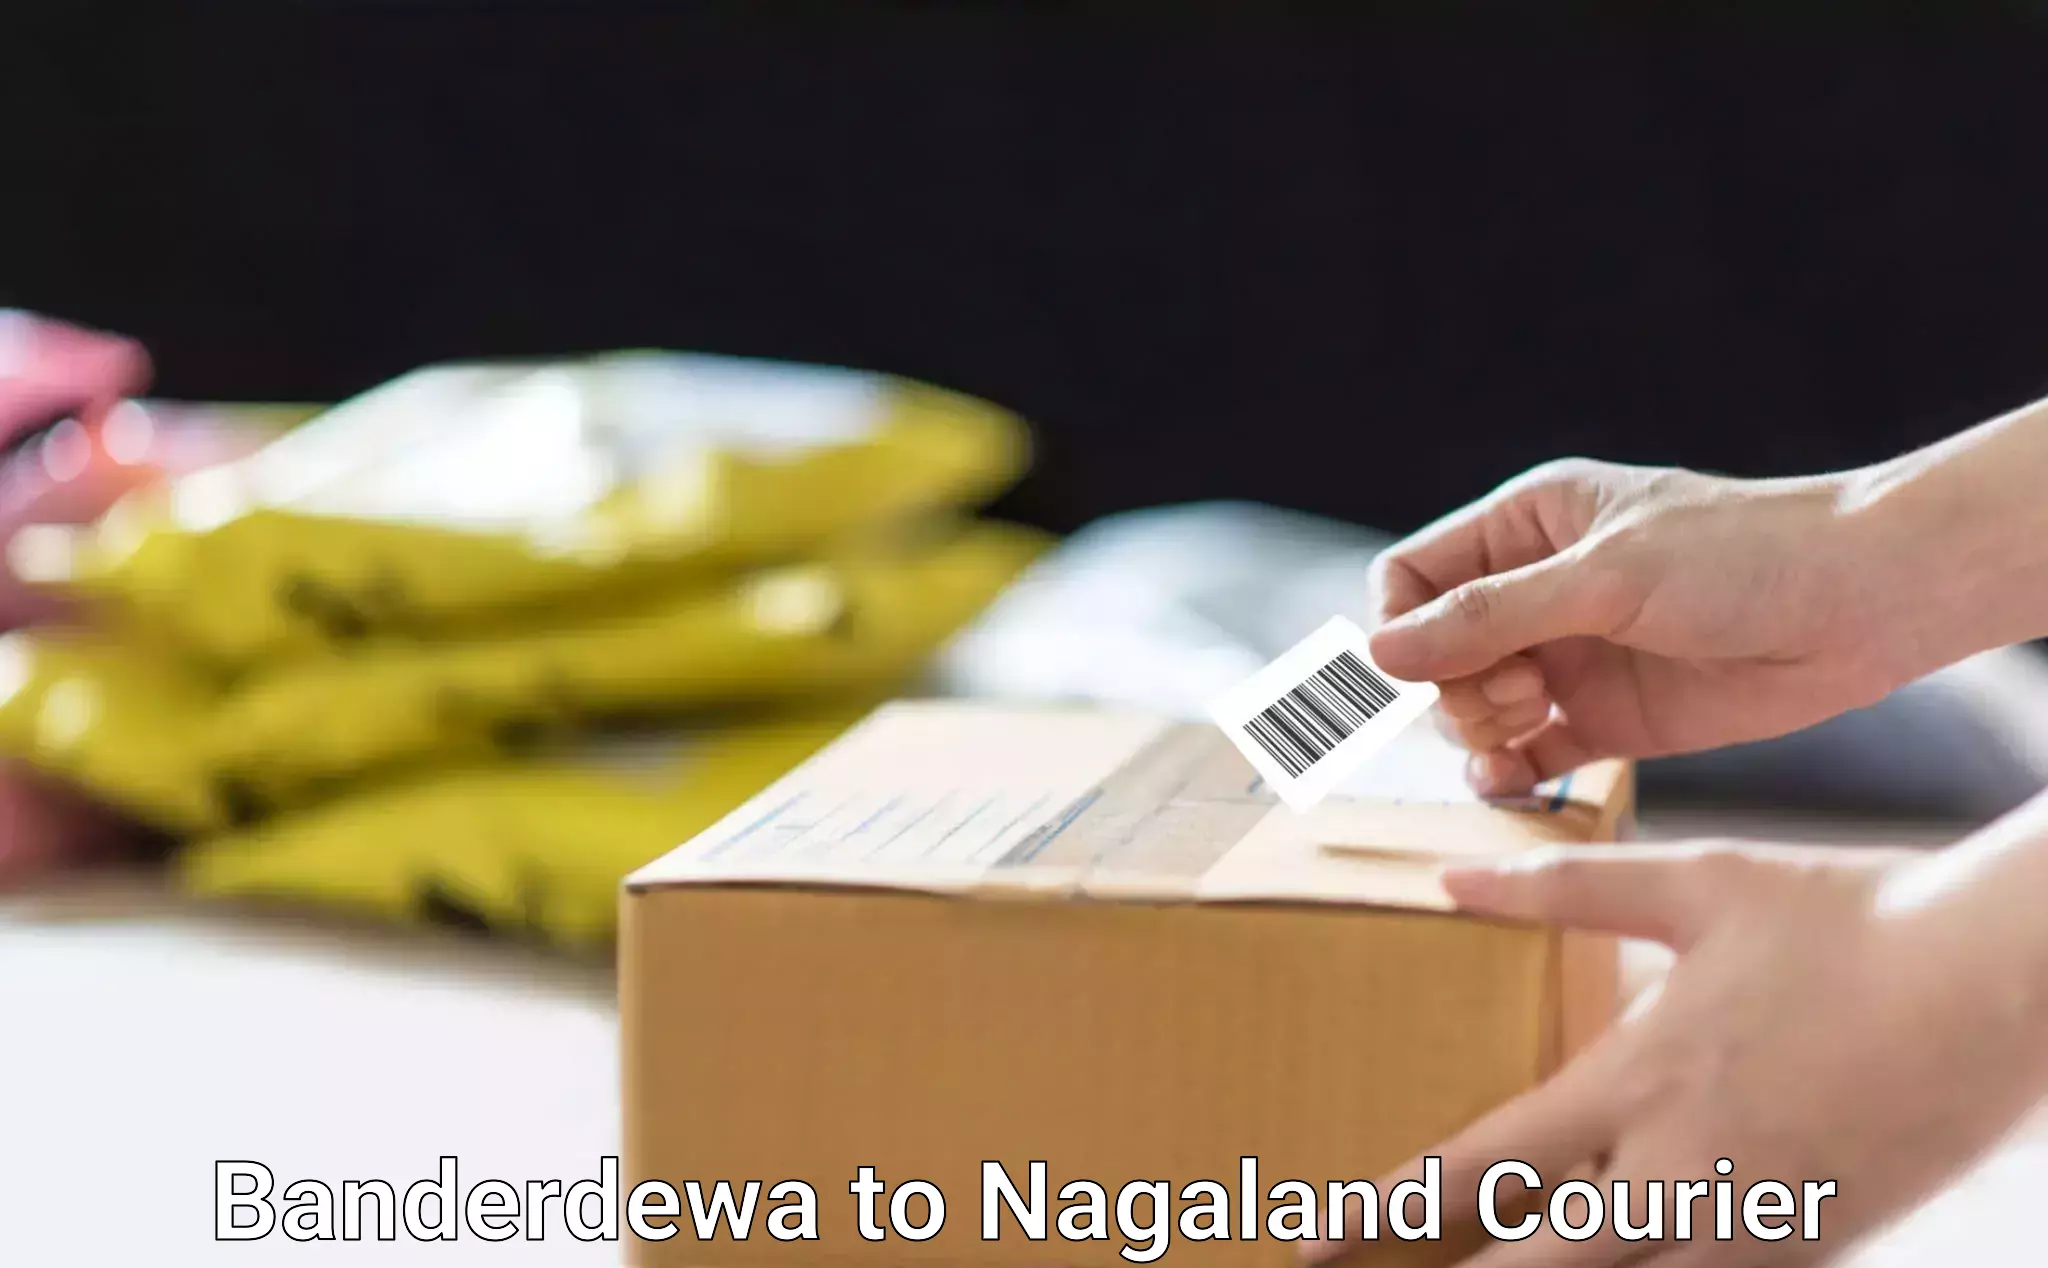 Secure packaging Banderdewa to Nagaland